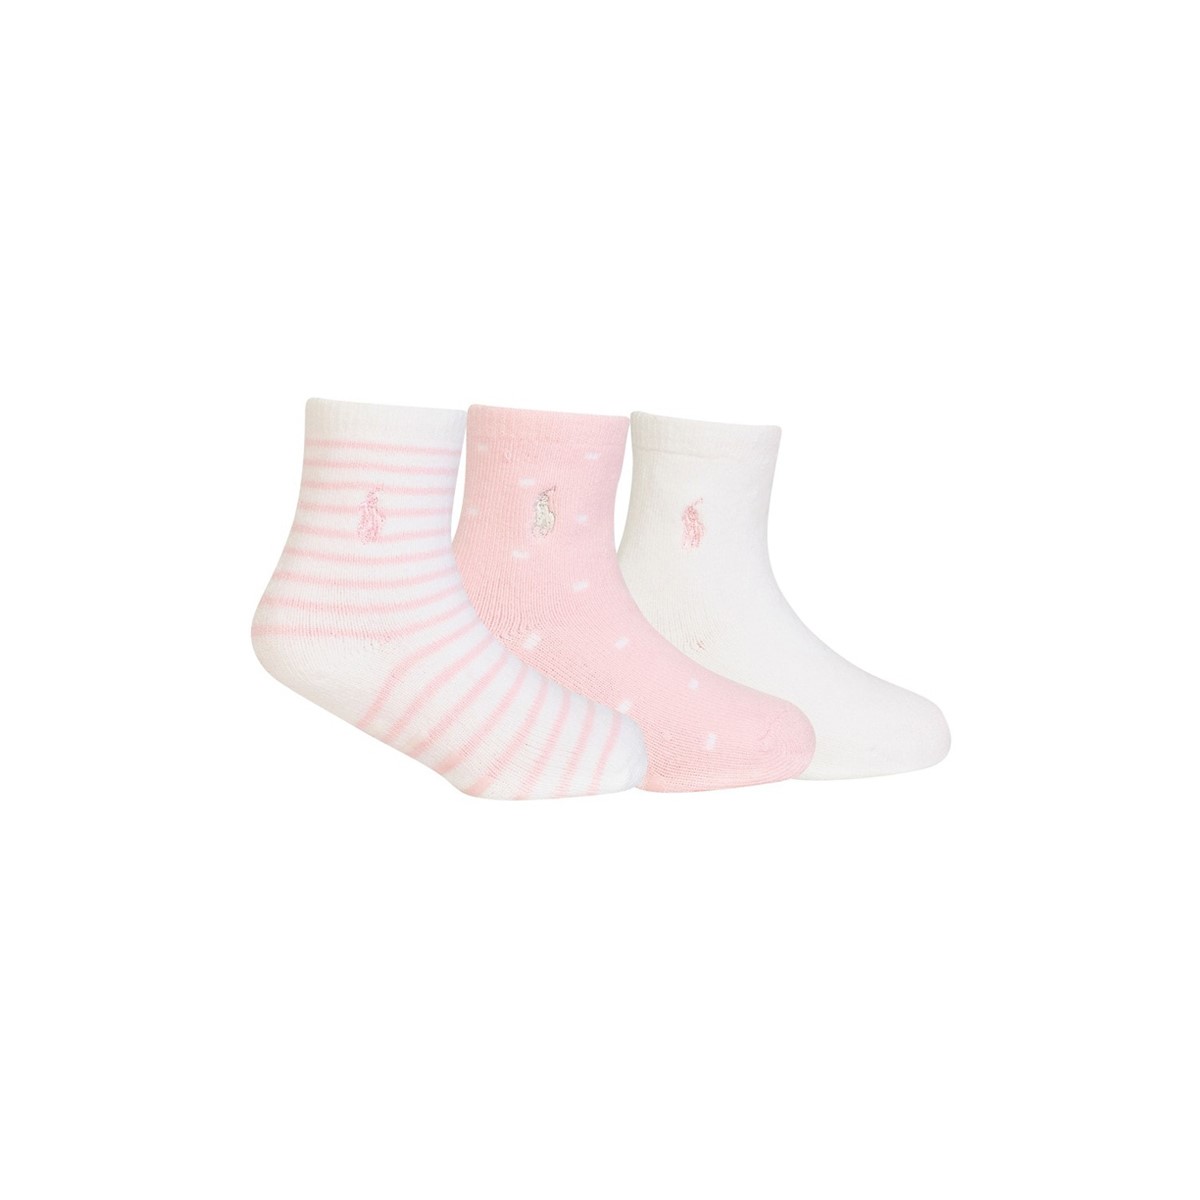 Baby's Three Pack Classic Crew Socks in Pink/White